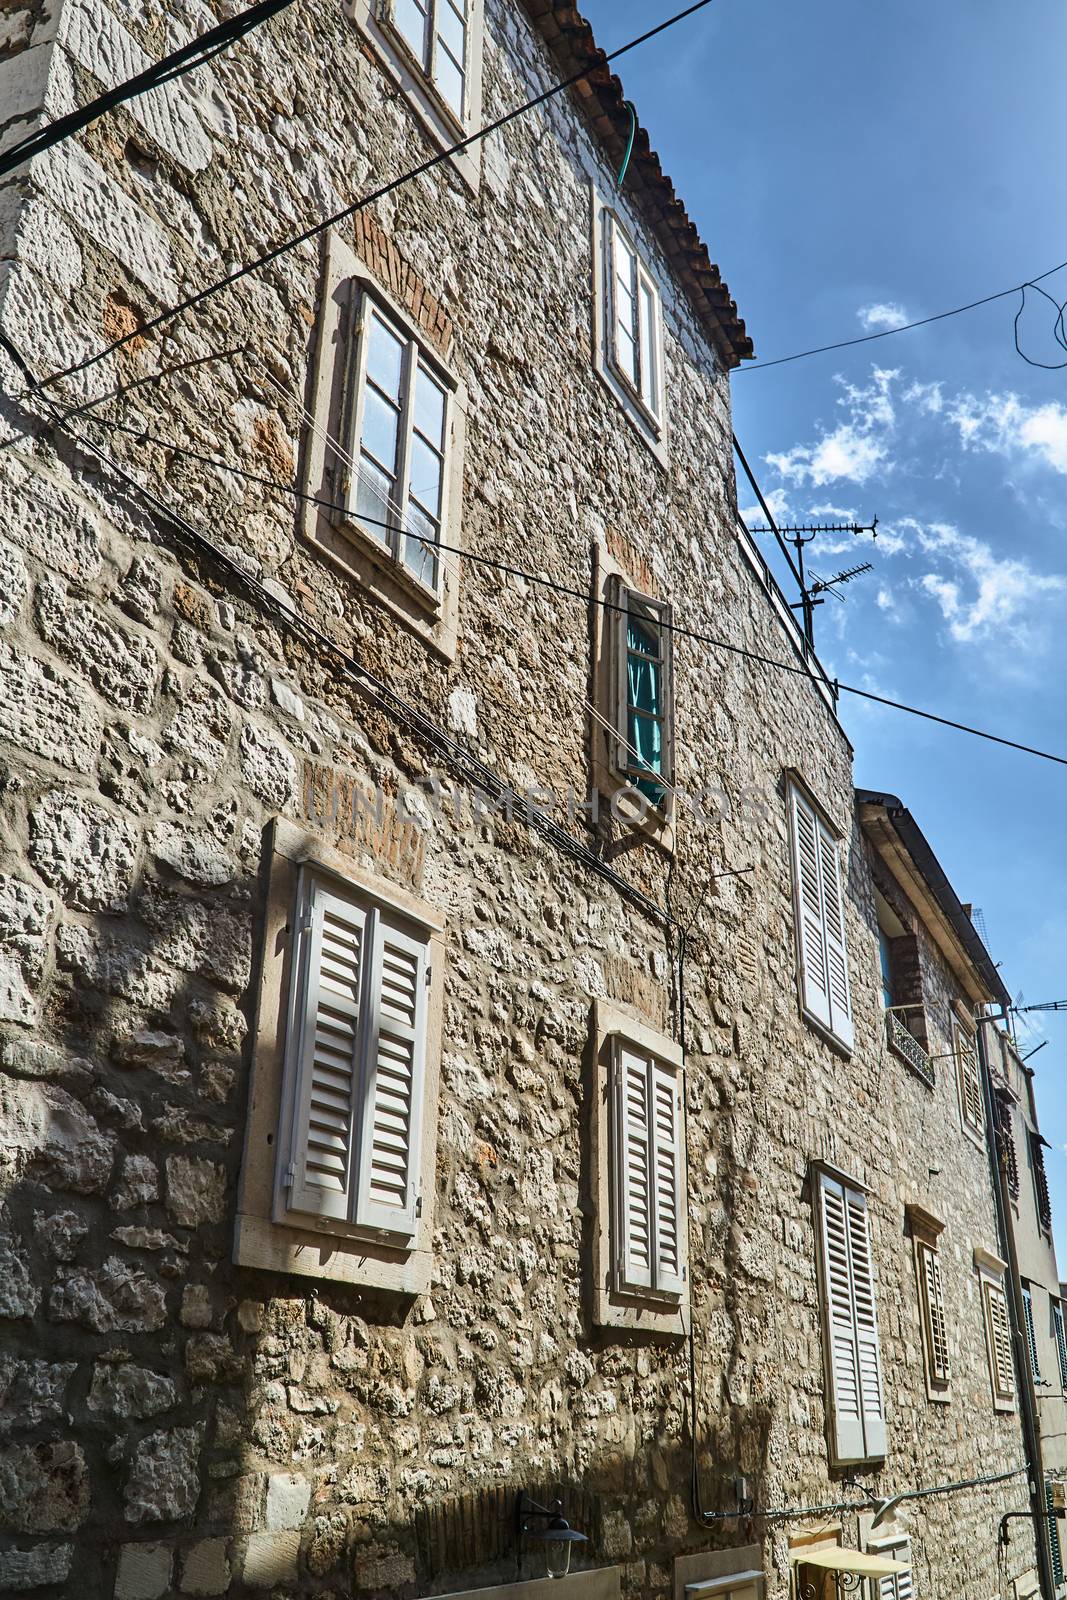 Street with stone tenement houses in Sibenik, Croatia